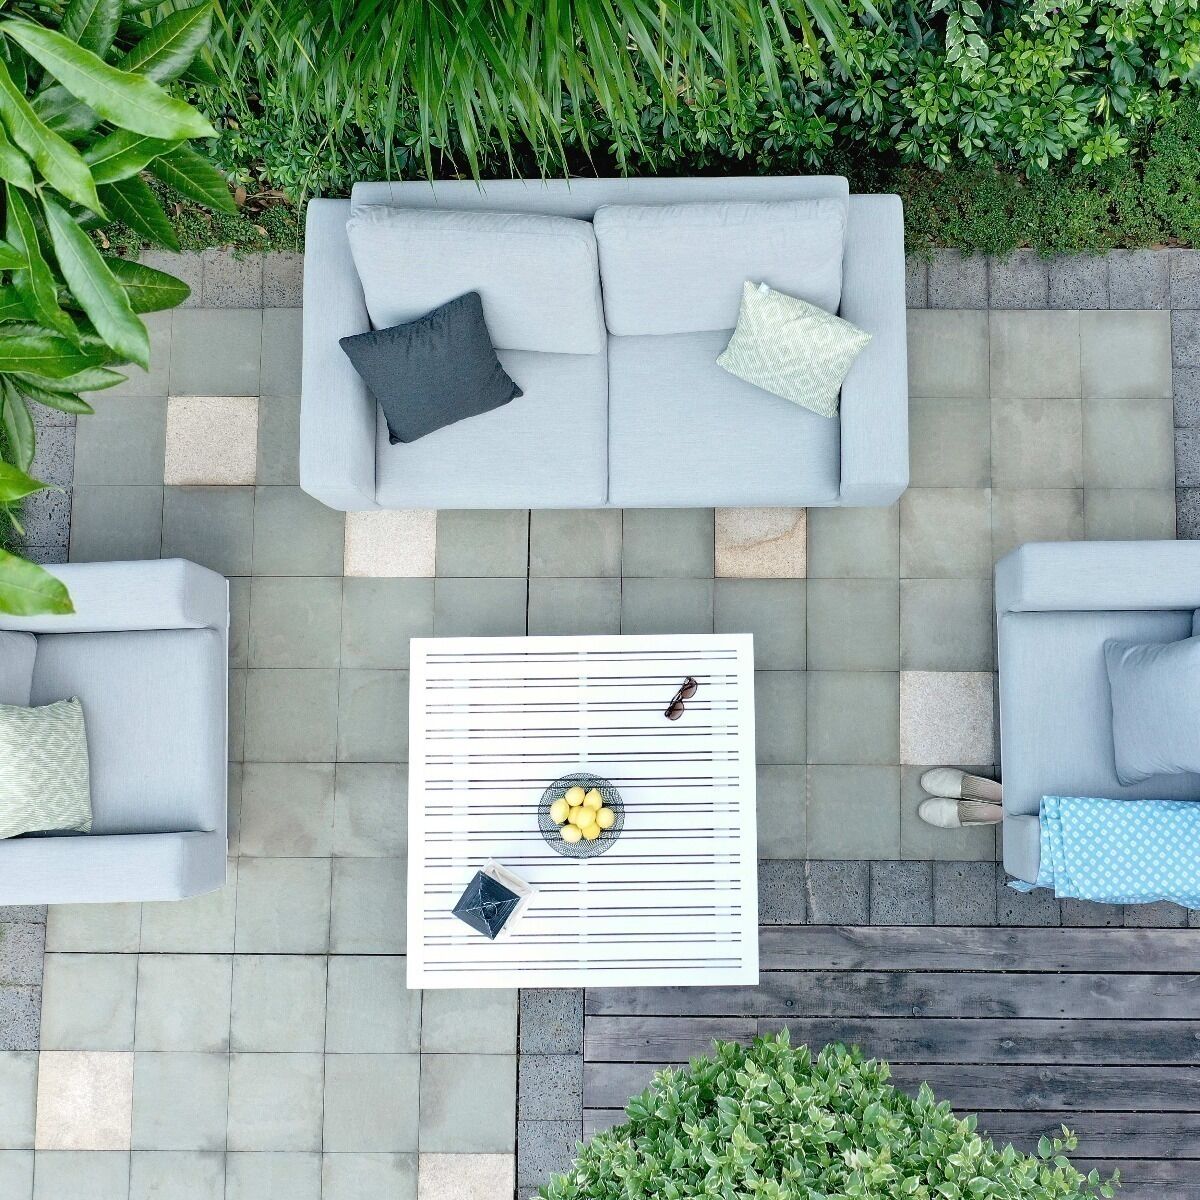 Maze - Outdoor Fabric Ethos 2 Seat Sofa Set - Lead Chine product image